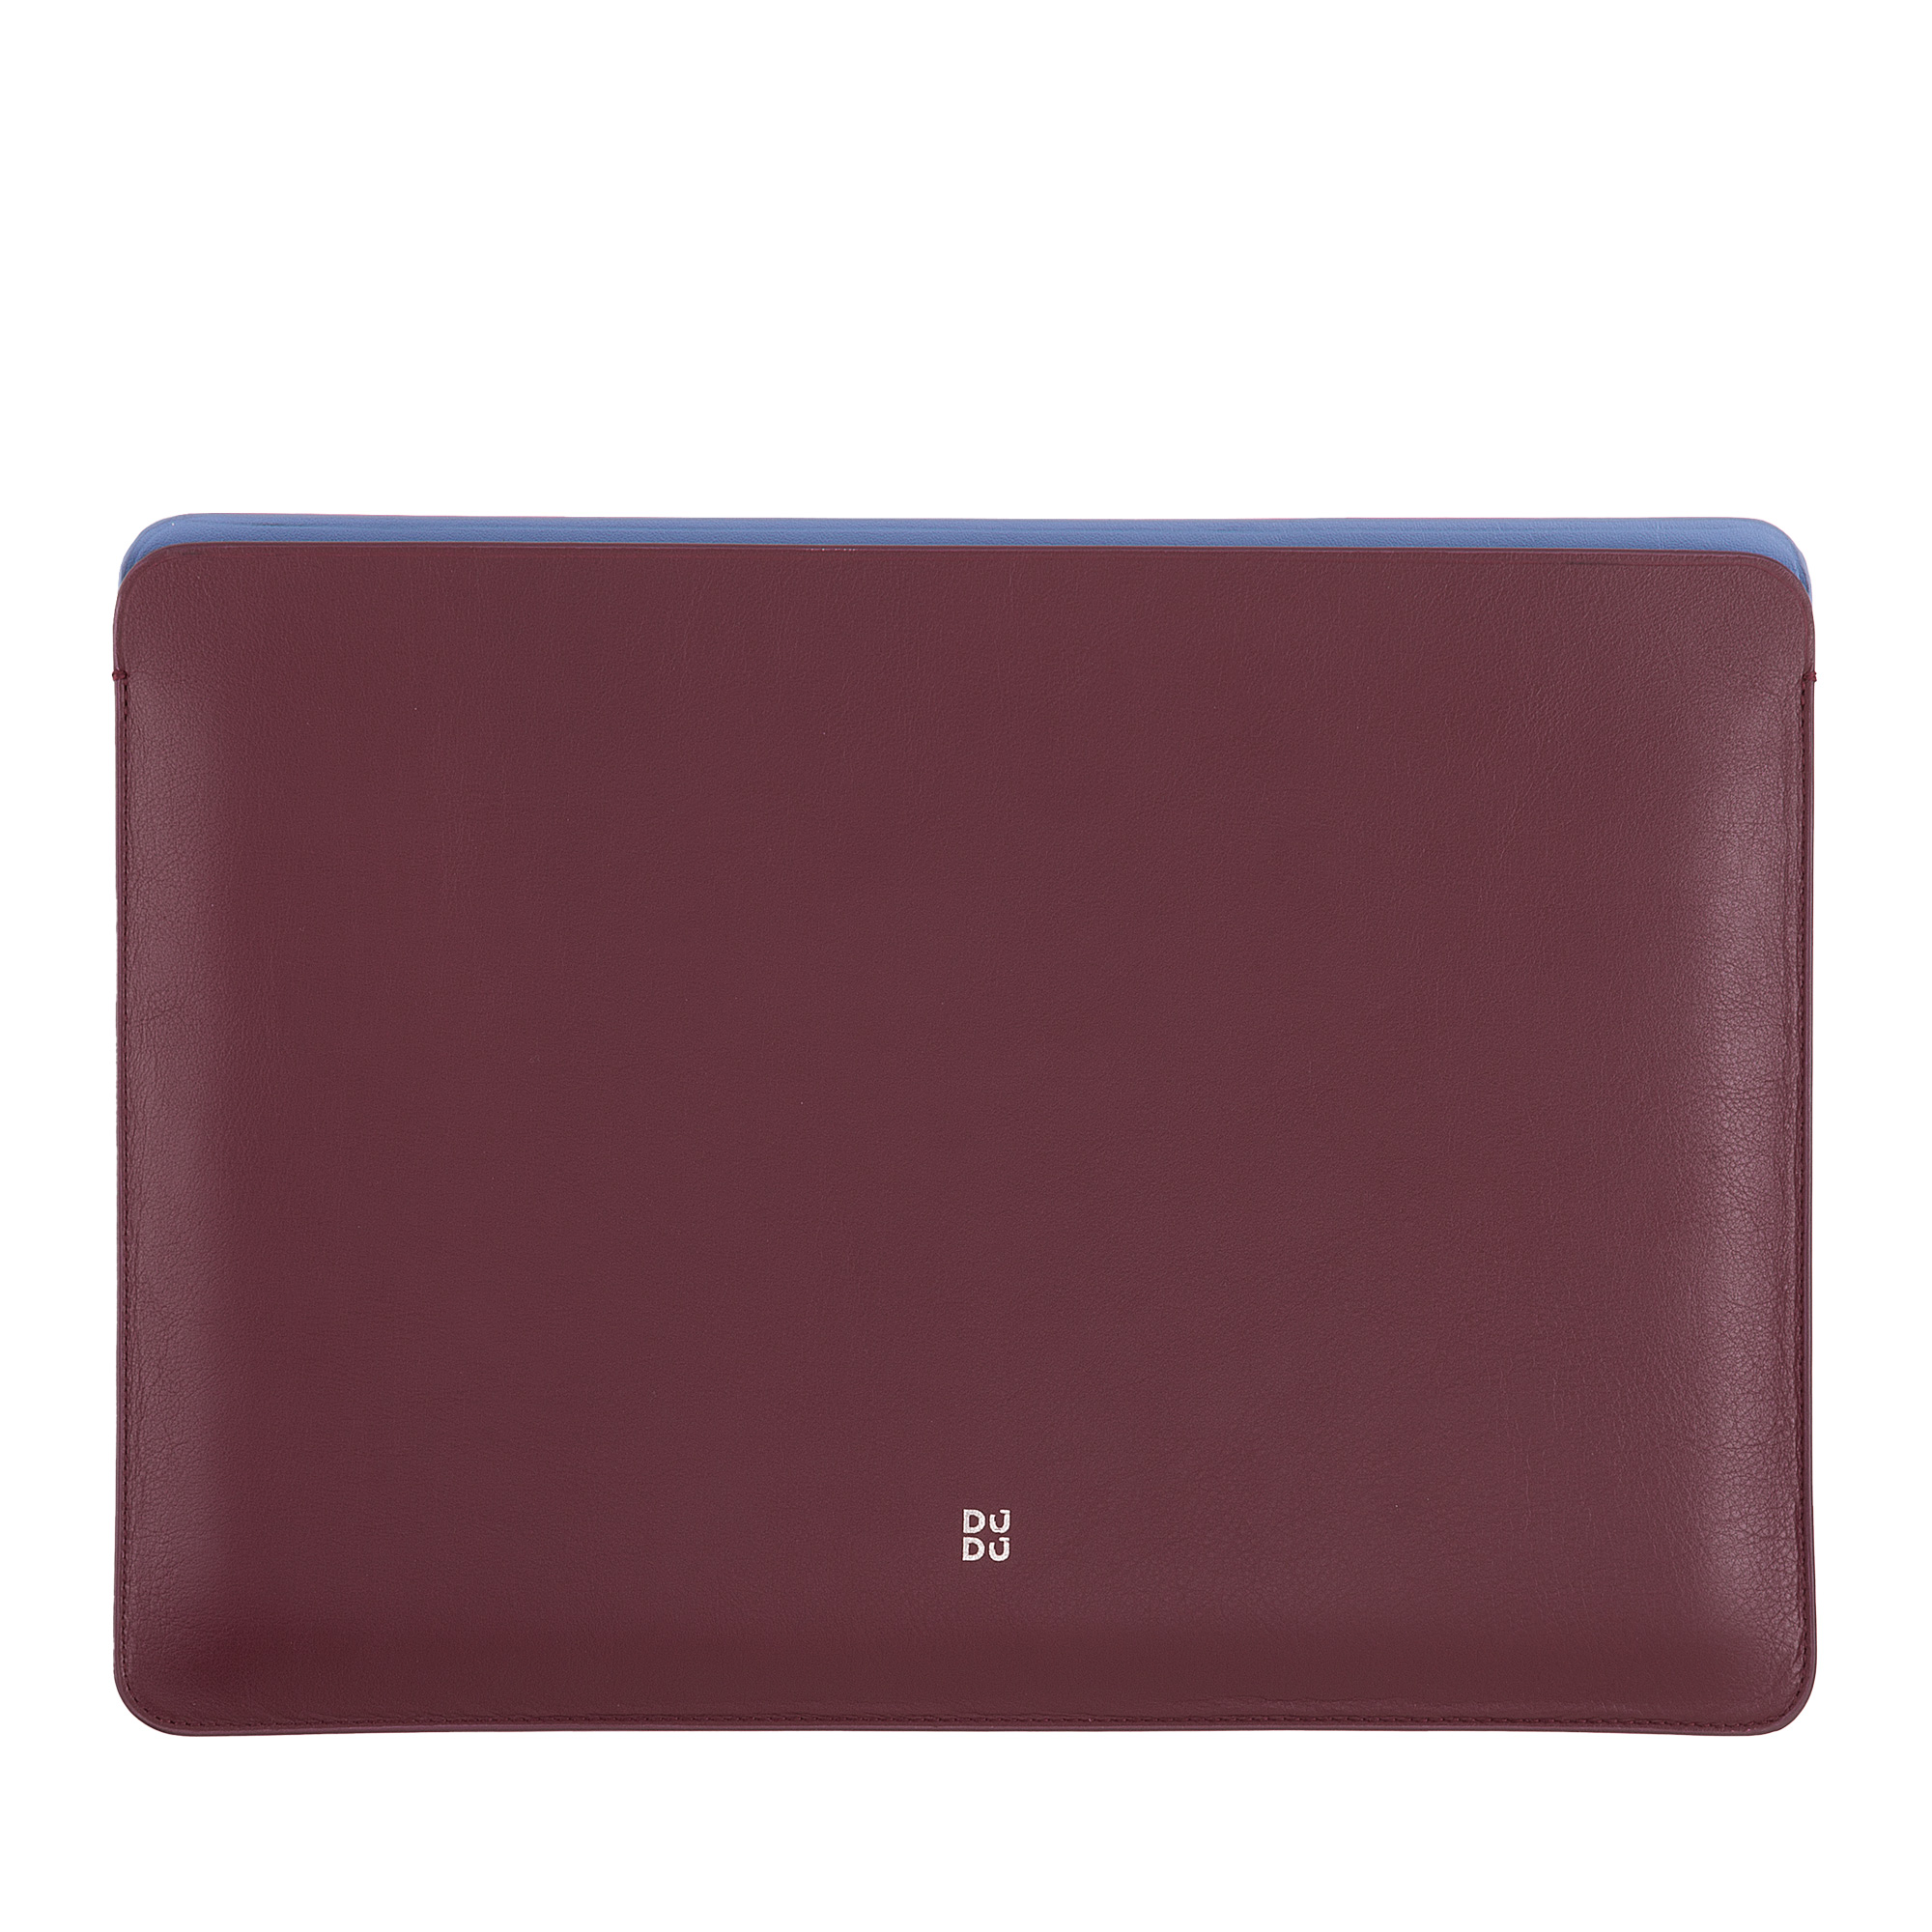 Colorful - Laptop sleeve - Burgundy